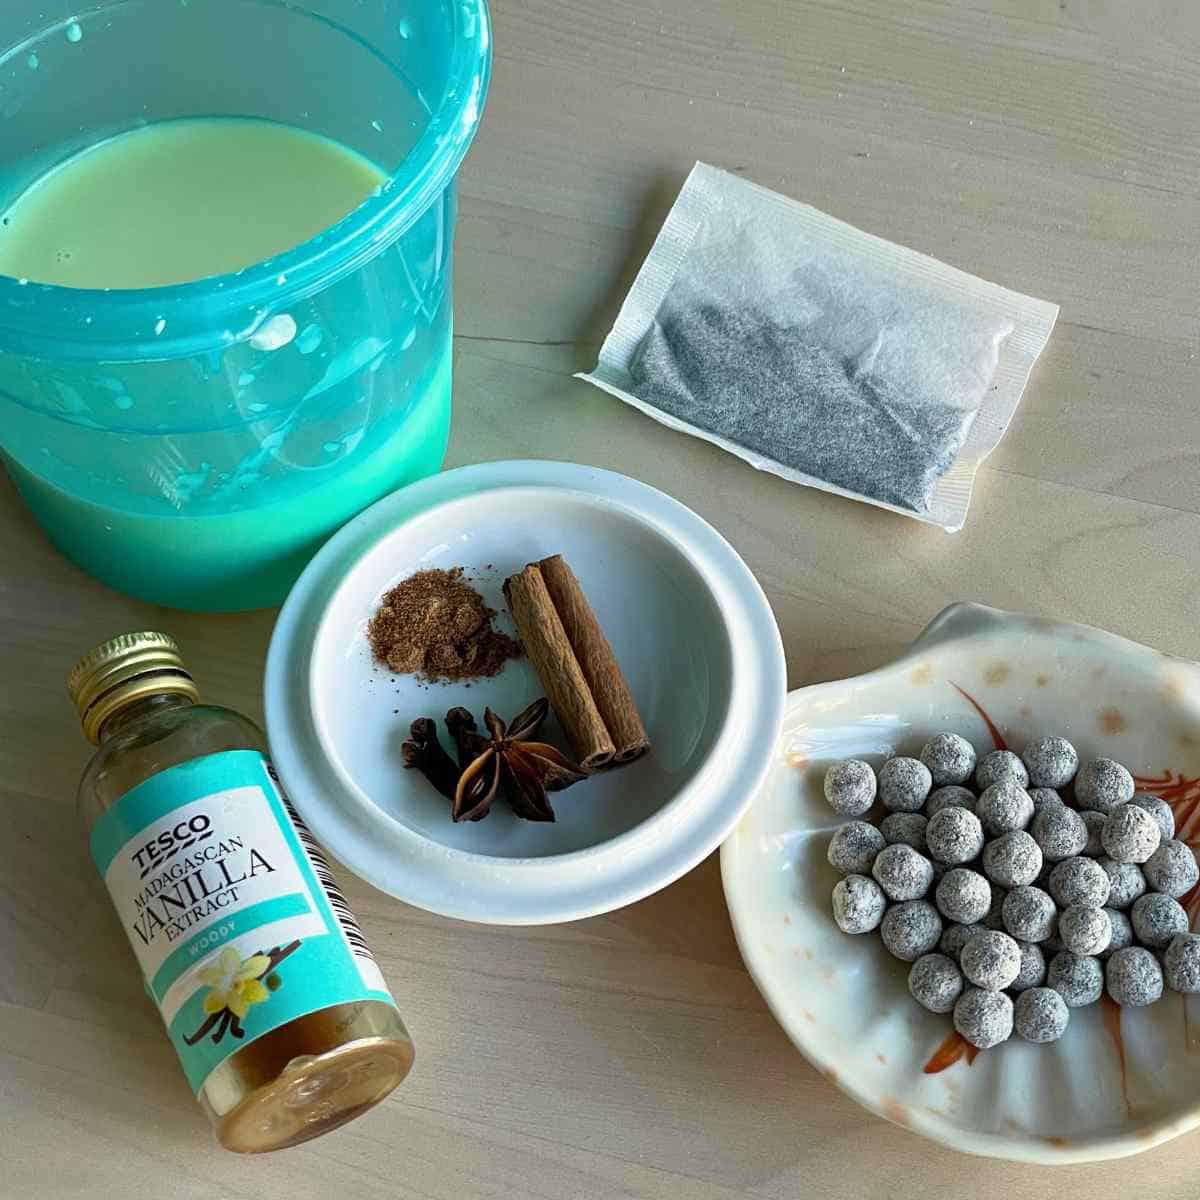 Spiced assam milk tea boba ingredients